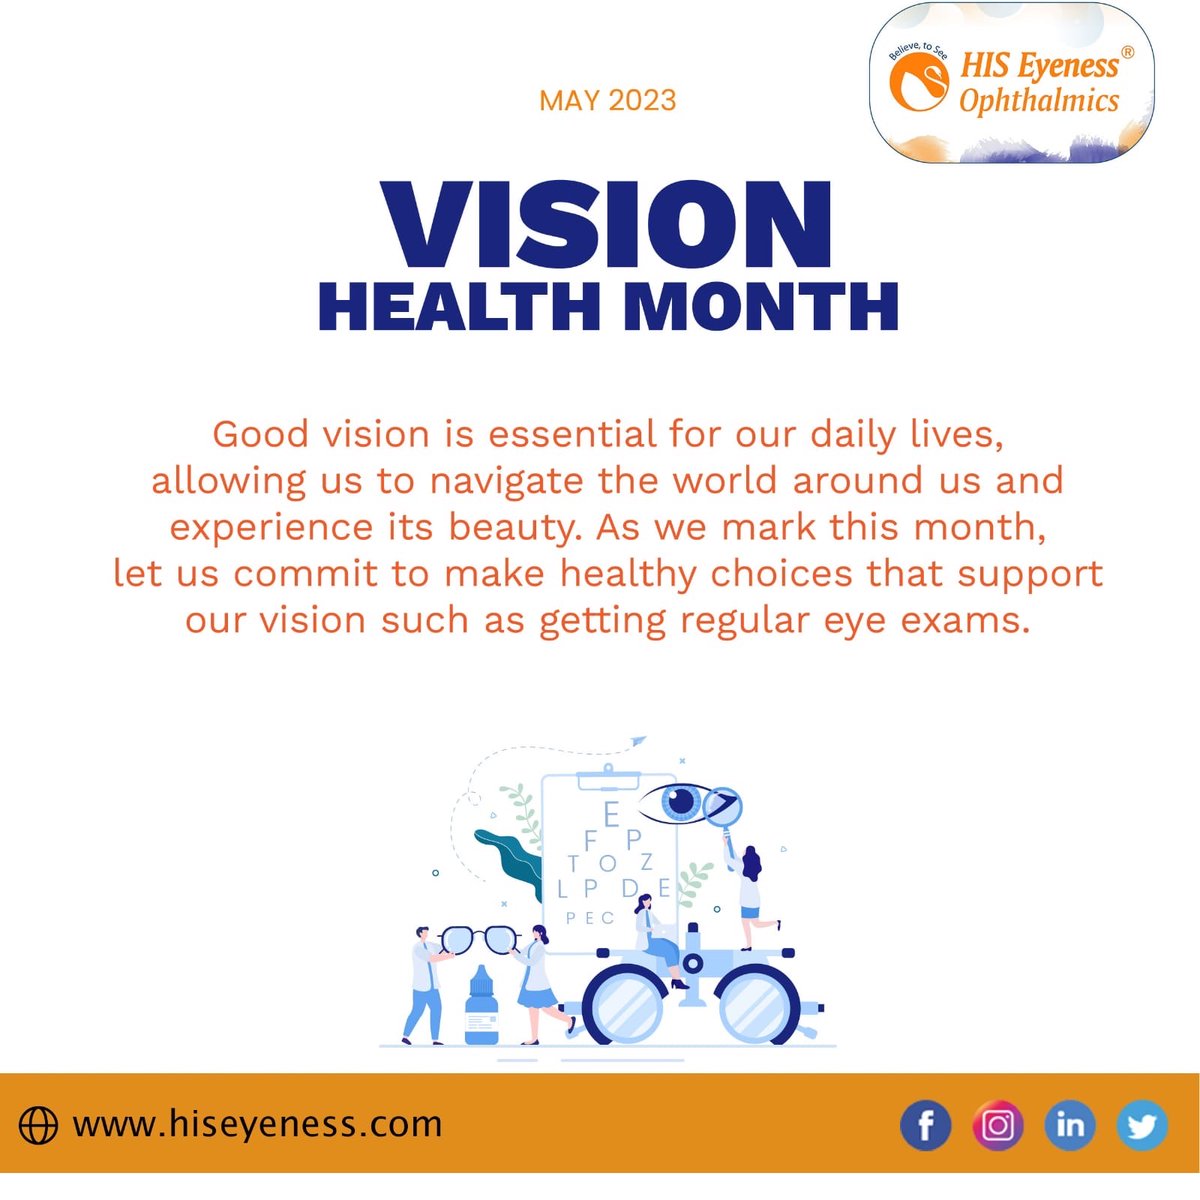 #VisionHealthMonth
.
.
.
.
.
.
.
#ConsultYourOphthalmologist #protectyoureyes  #eyesforlives #hiseyenesscares #hiseyeness #hiseyenessophthalmics  #eyecare #visioncare #eyesight